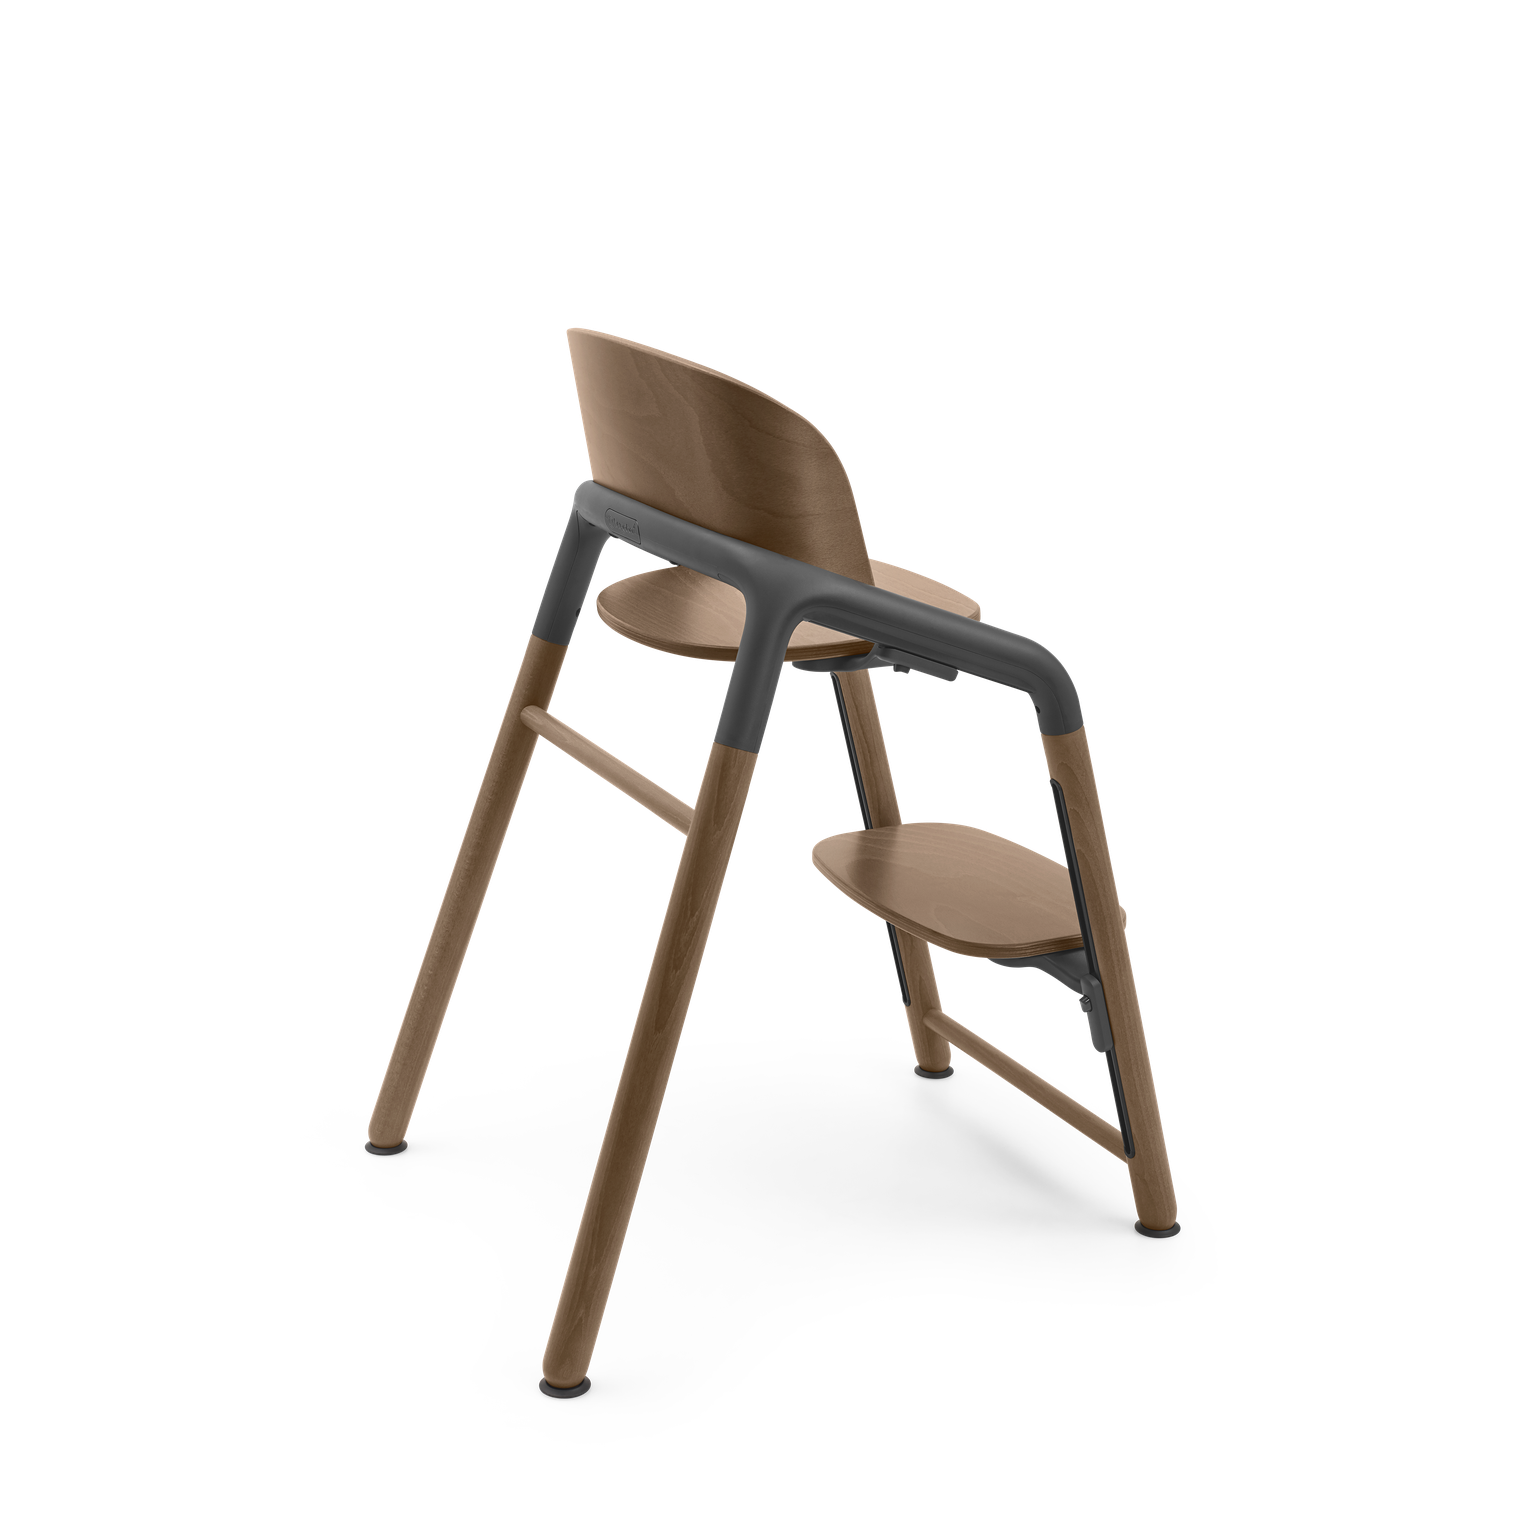 Bugaboo Giraffe High Chair Base - Warm Wood/Grey | Direct4baby | Free Delivery